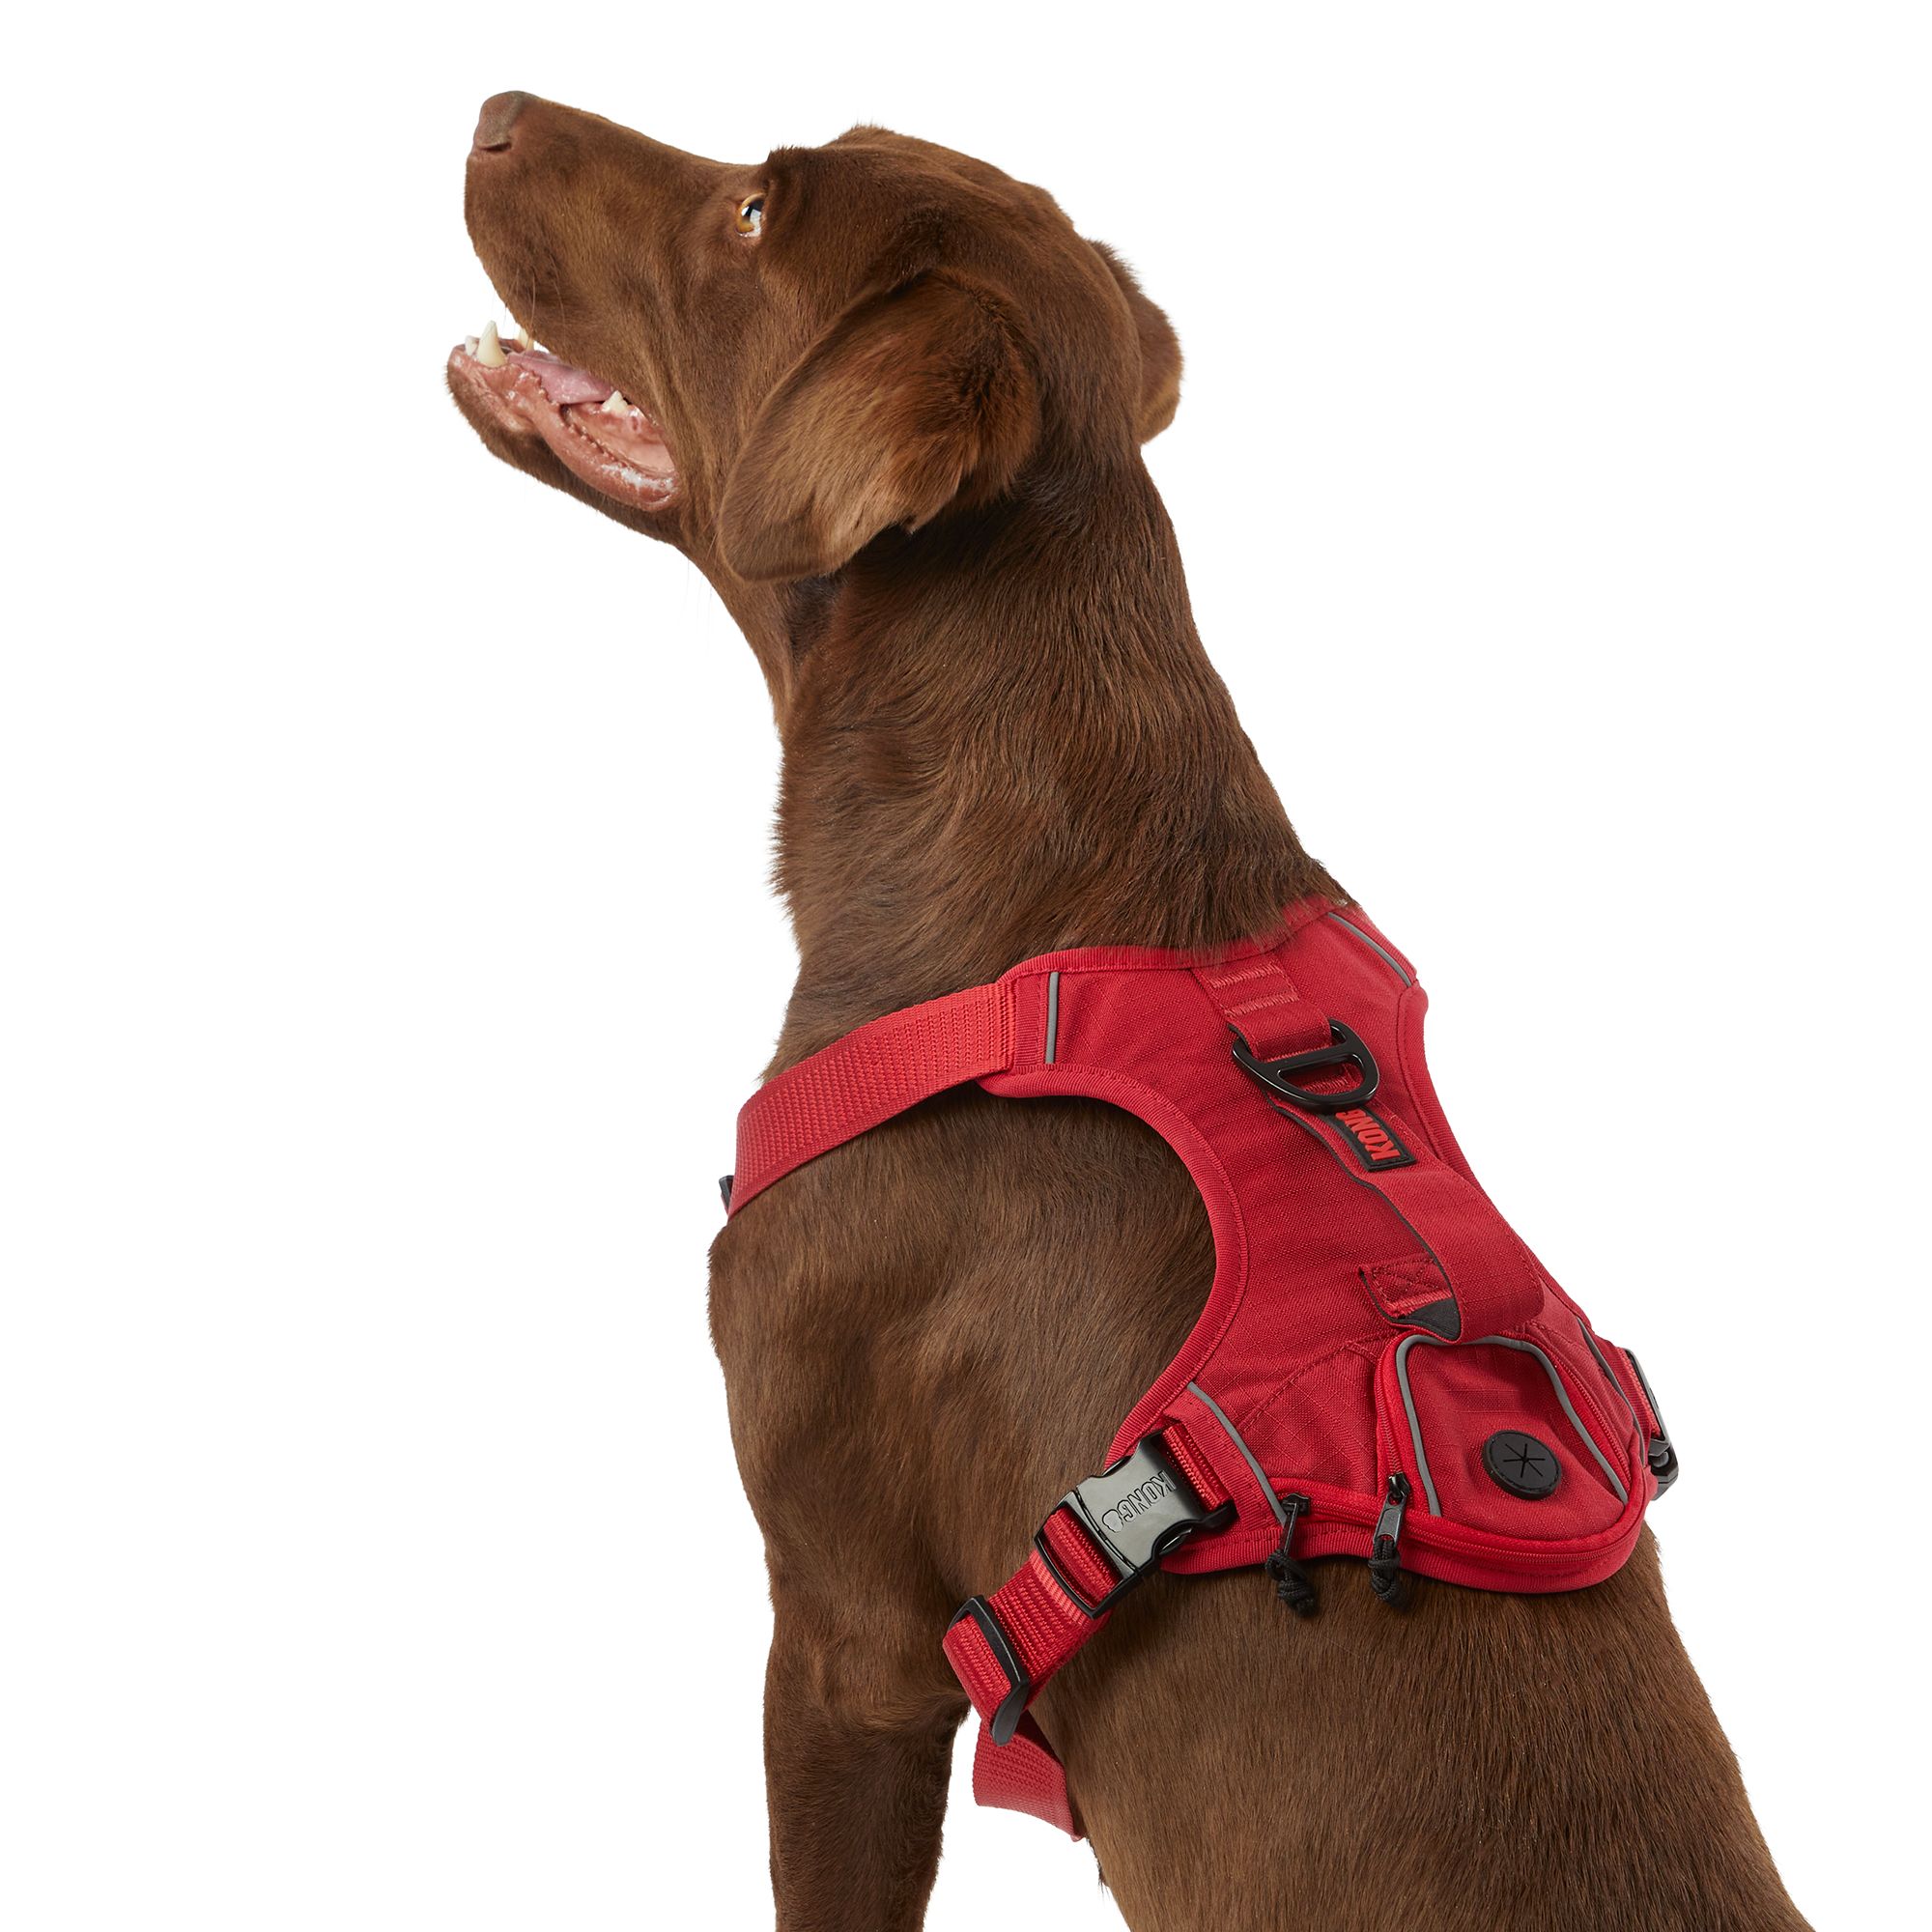 GS Warriors Dog Bandana No-Tie Design Slips onto the Collar